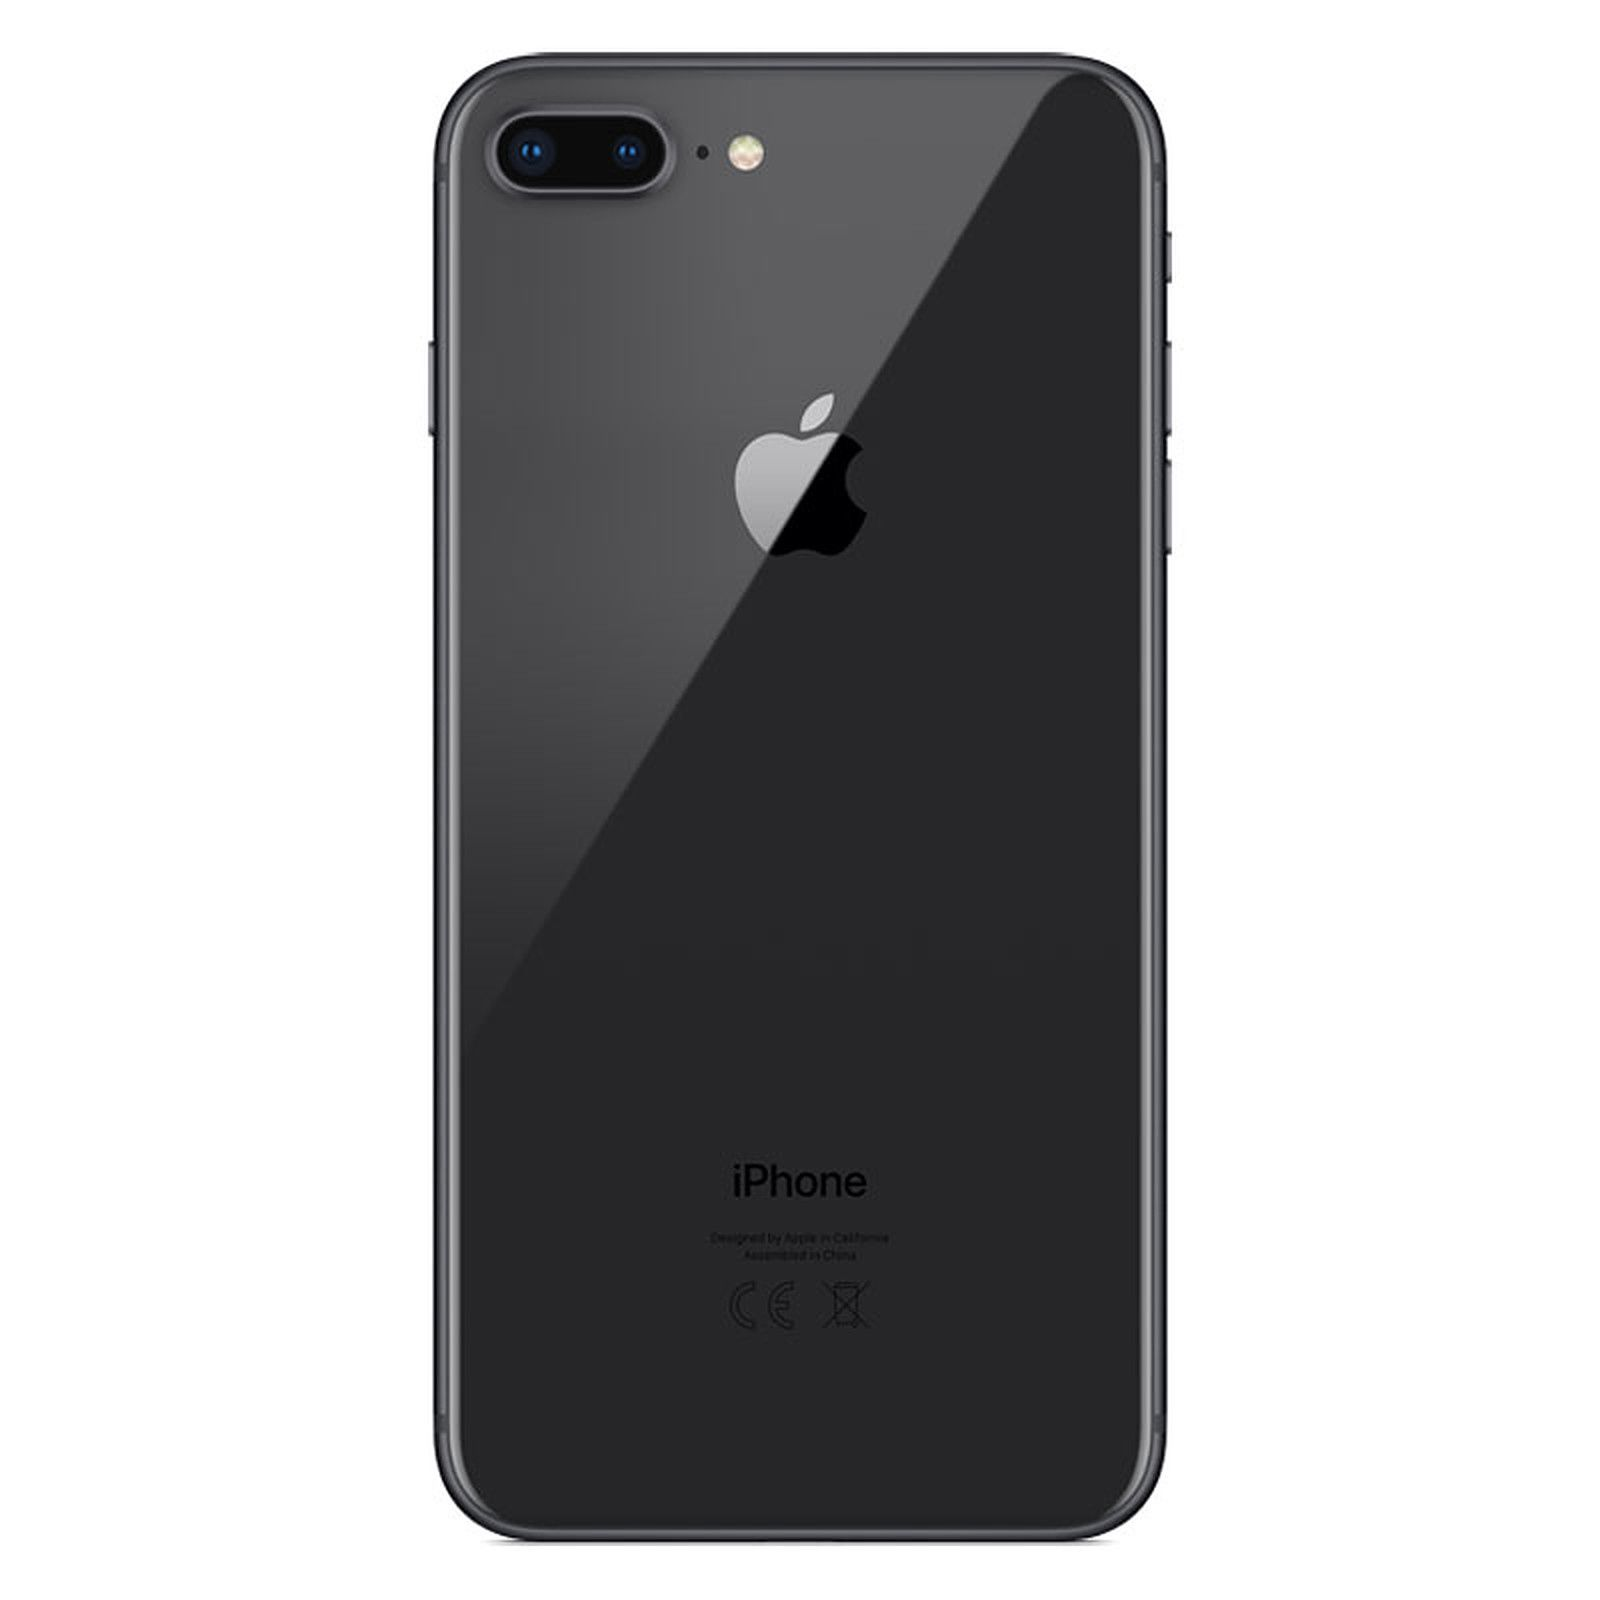 GB 64 64 iPhone GB schwarz (*) APPLE 8 Plus REFURBISHED